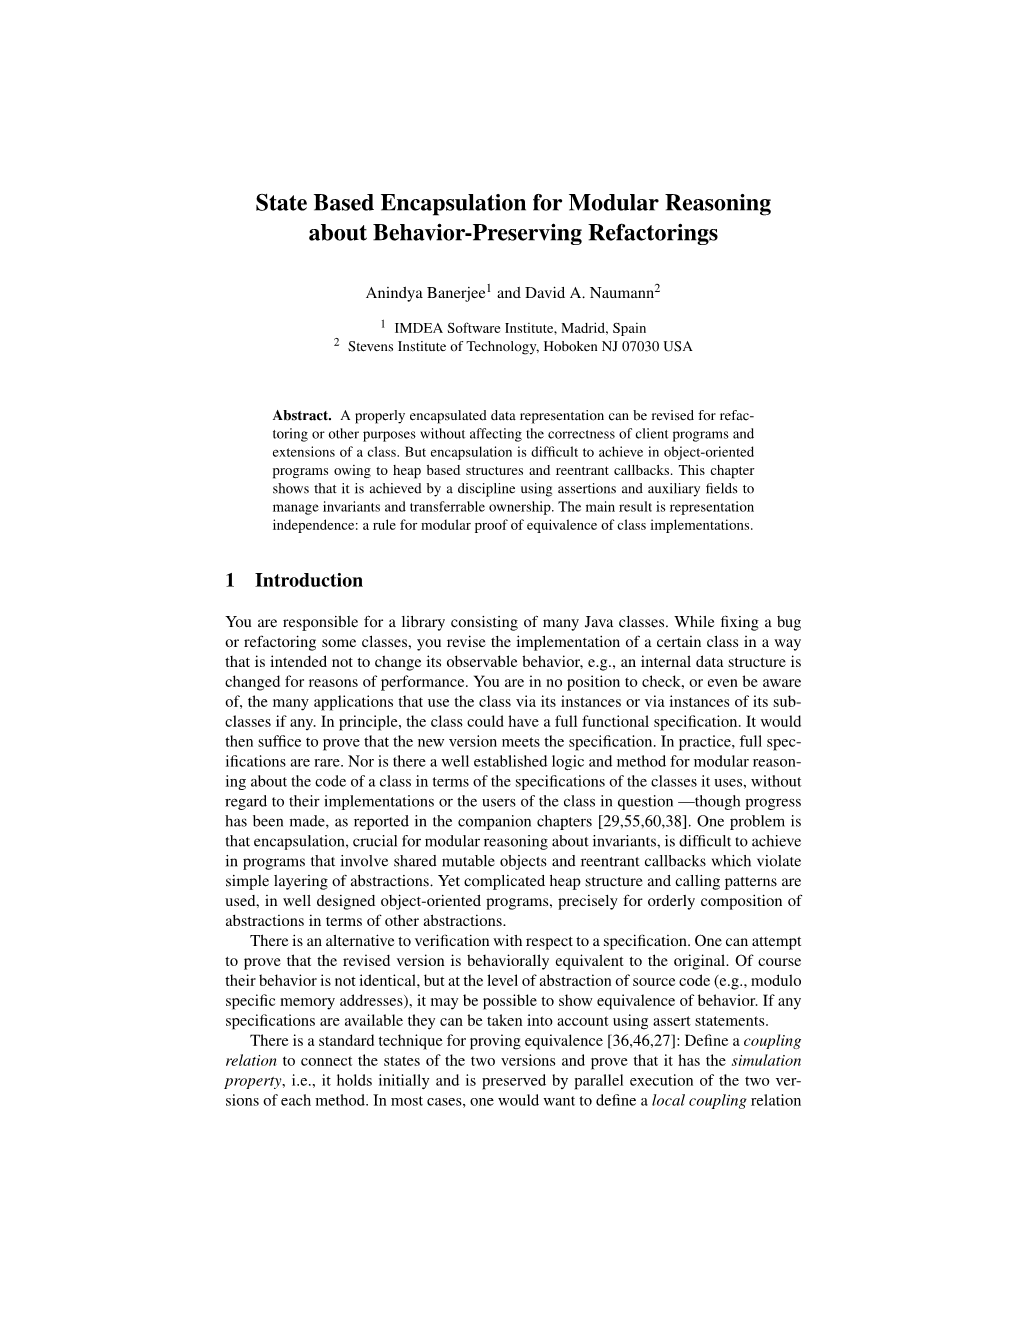 State Based Encapsulation for Modular Reasoning About Behavior-Preserving Refactorings